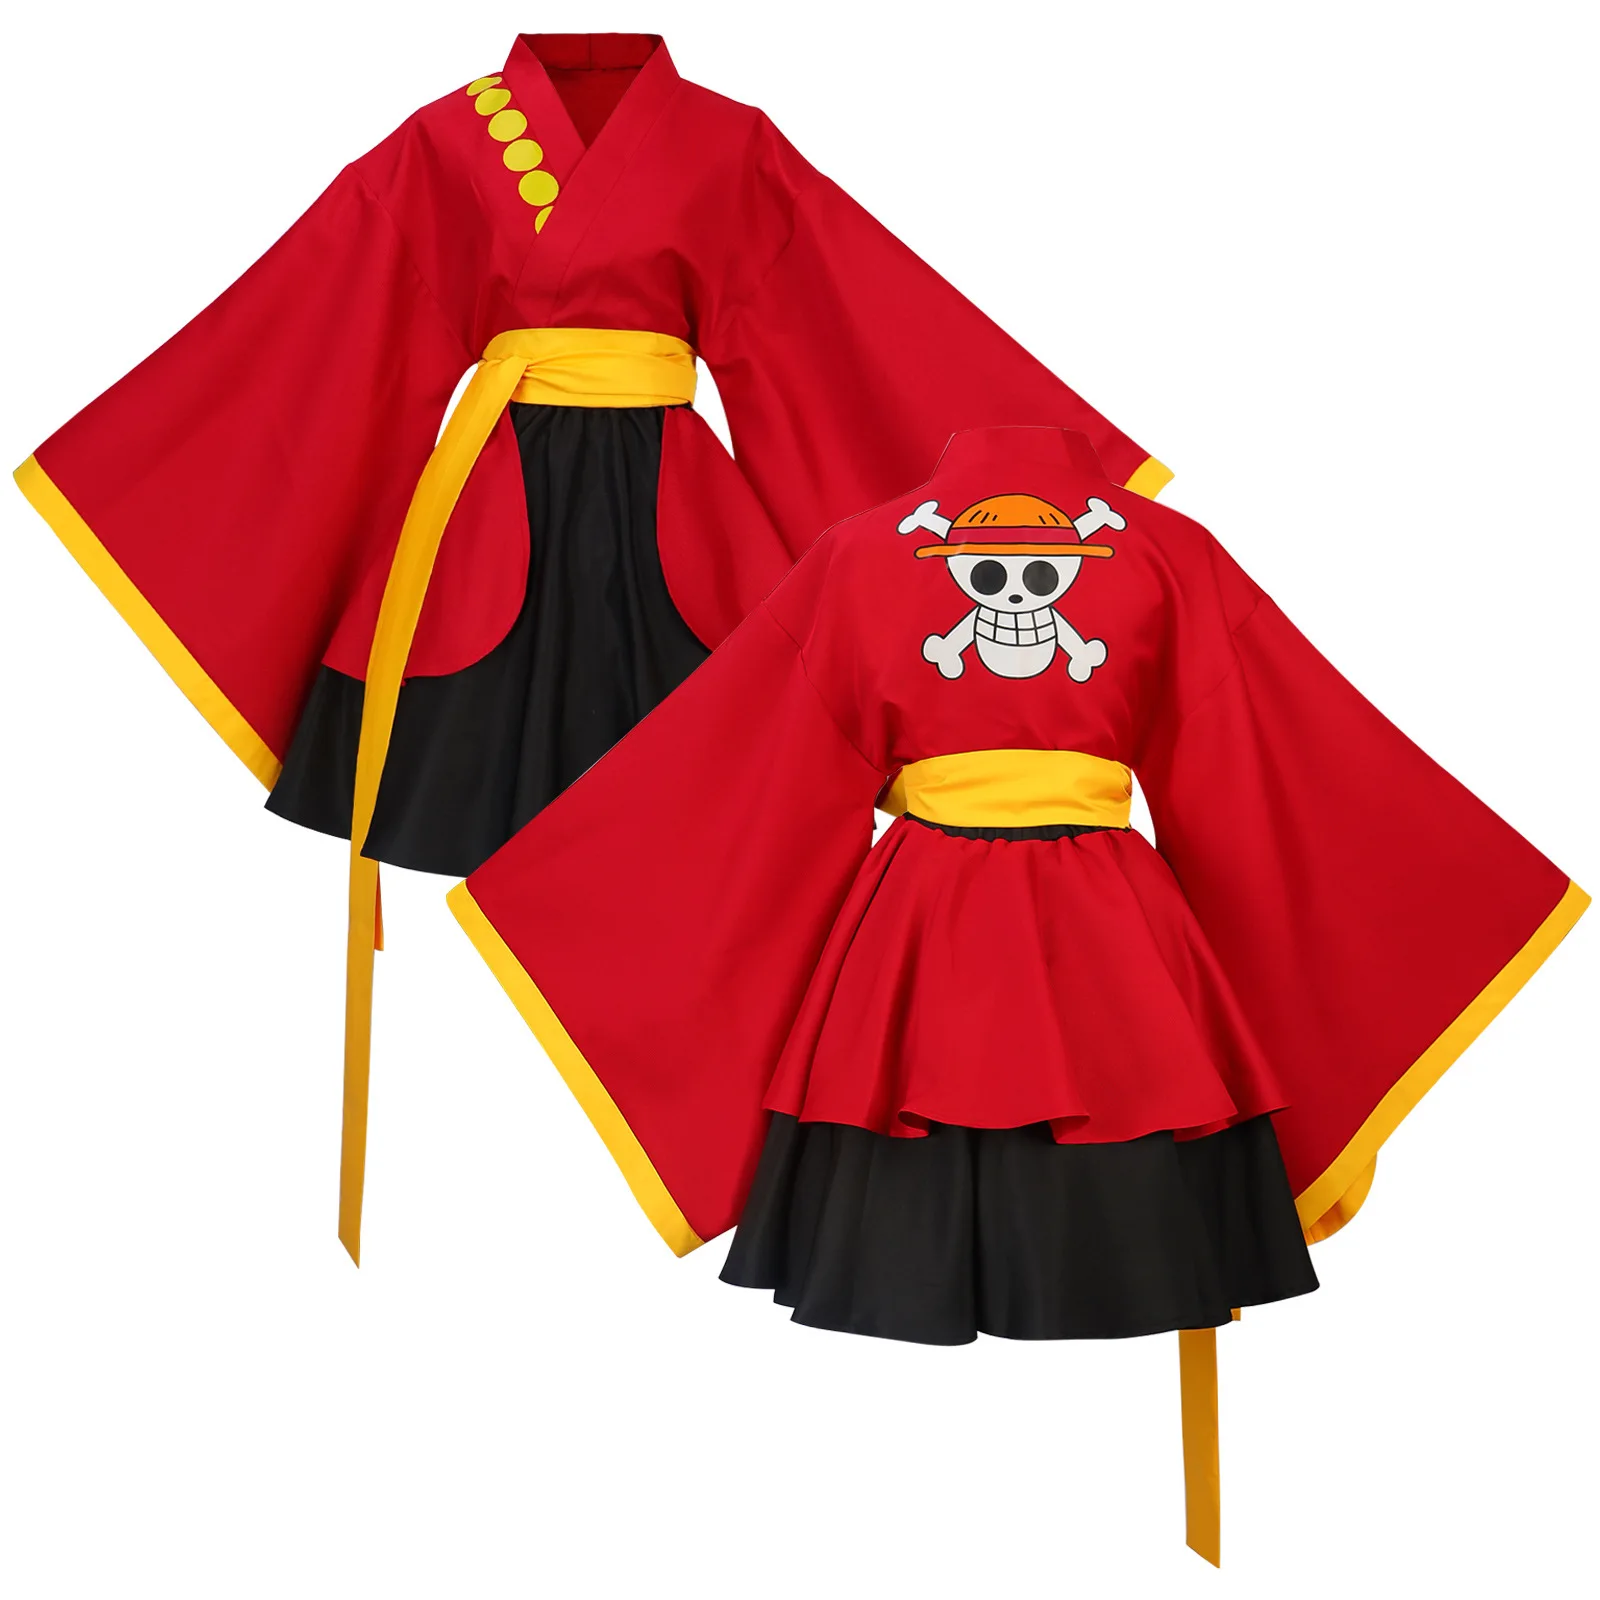 

Anime Roronoa Zoro Cosplay Costume Adult Men's Red Japanese Kimono Uniform Halloween Party Role PlayOutfits